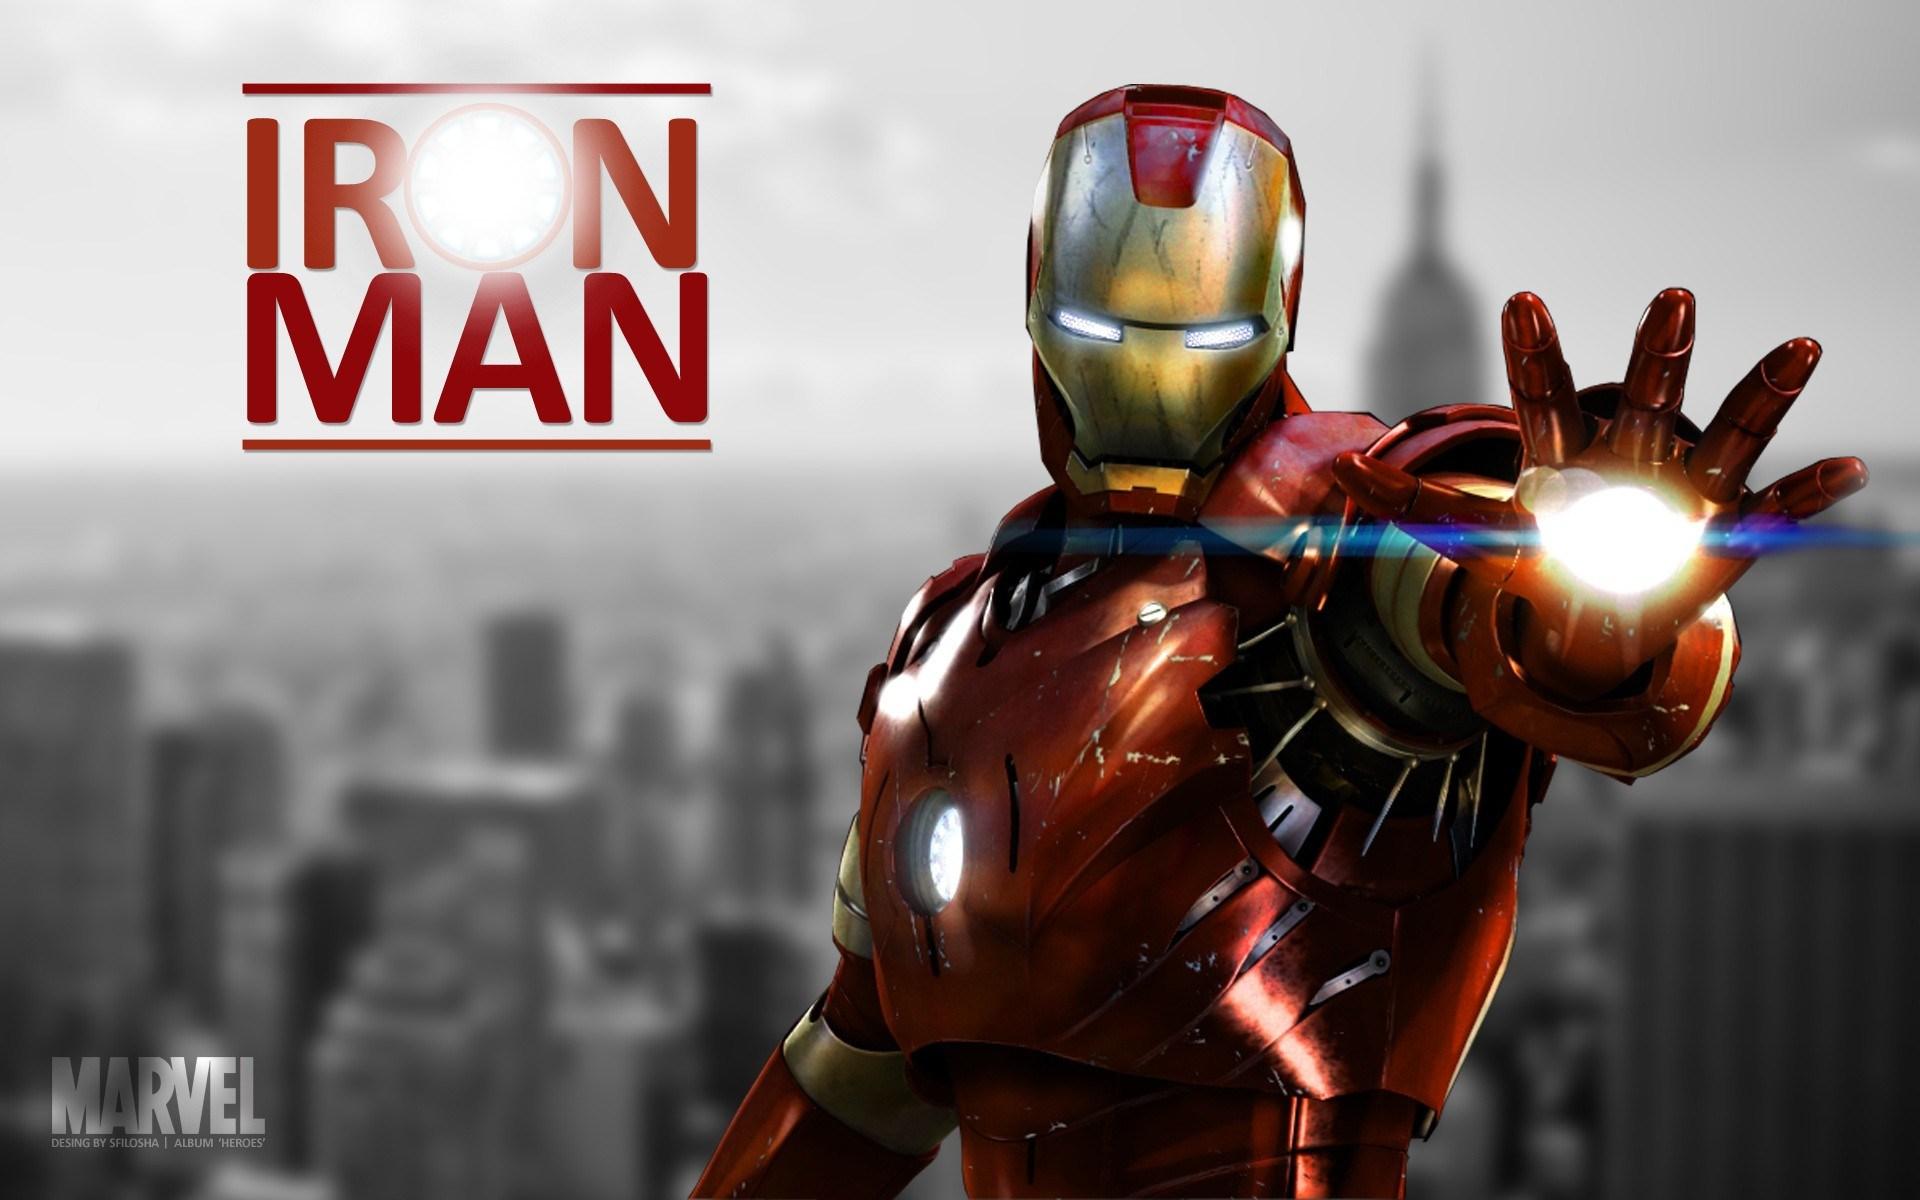 Iron man Sticker For Laptop Screen Background design